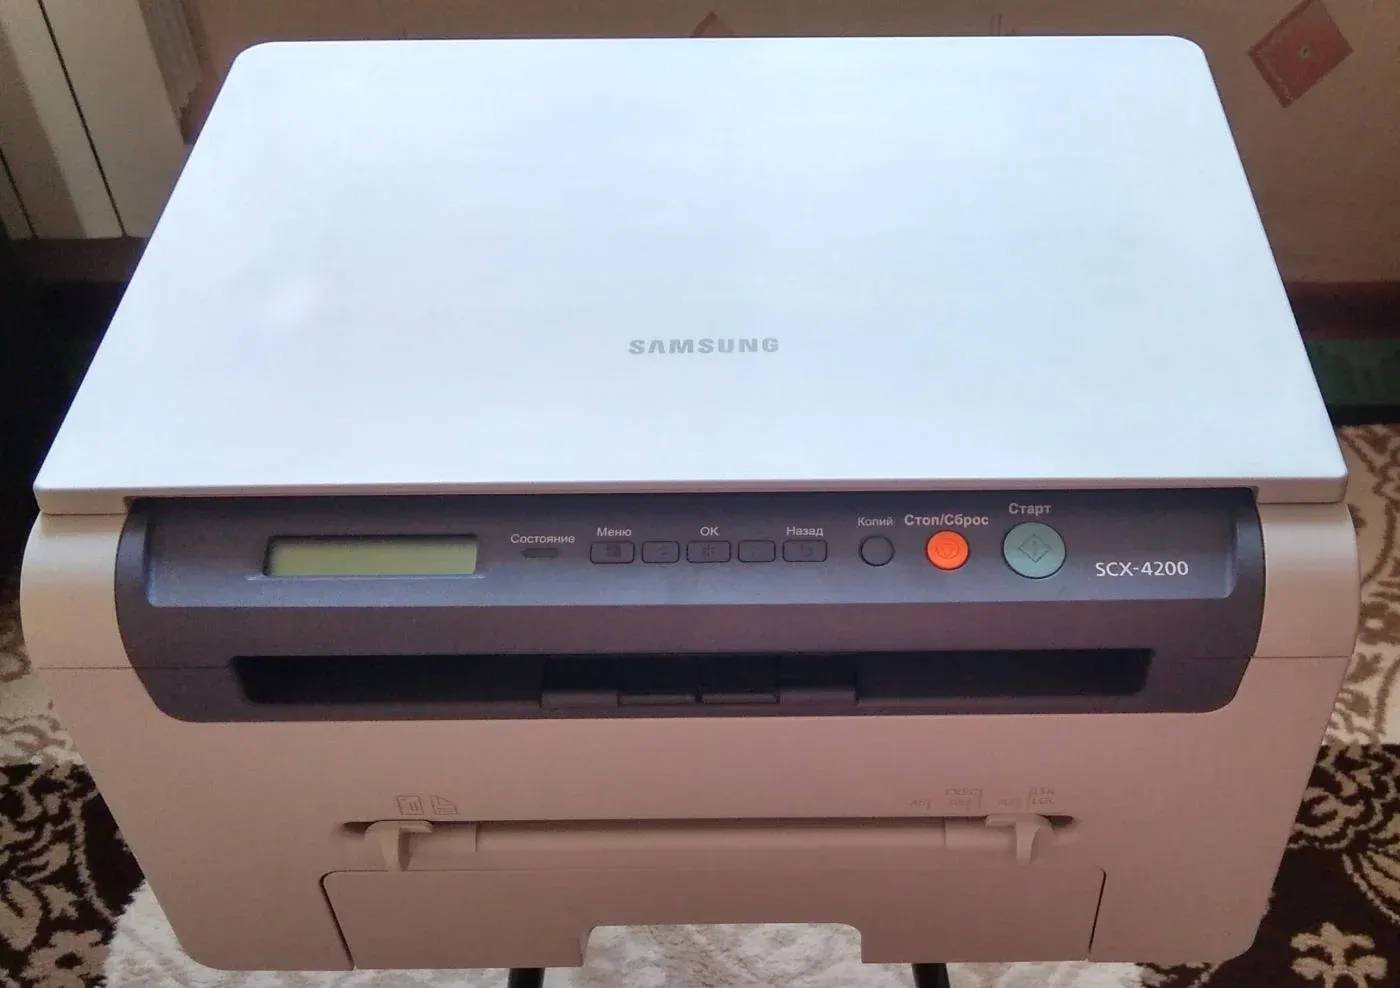 Samsung scx 4200 series. МФУ Samsung SCX-4200. Принтер самсунг 4200. Принтер сканер копир Samsung SCX 4200. Samsung SCX 4220.